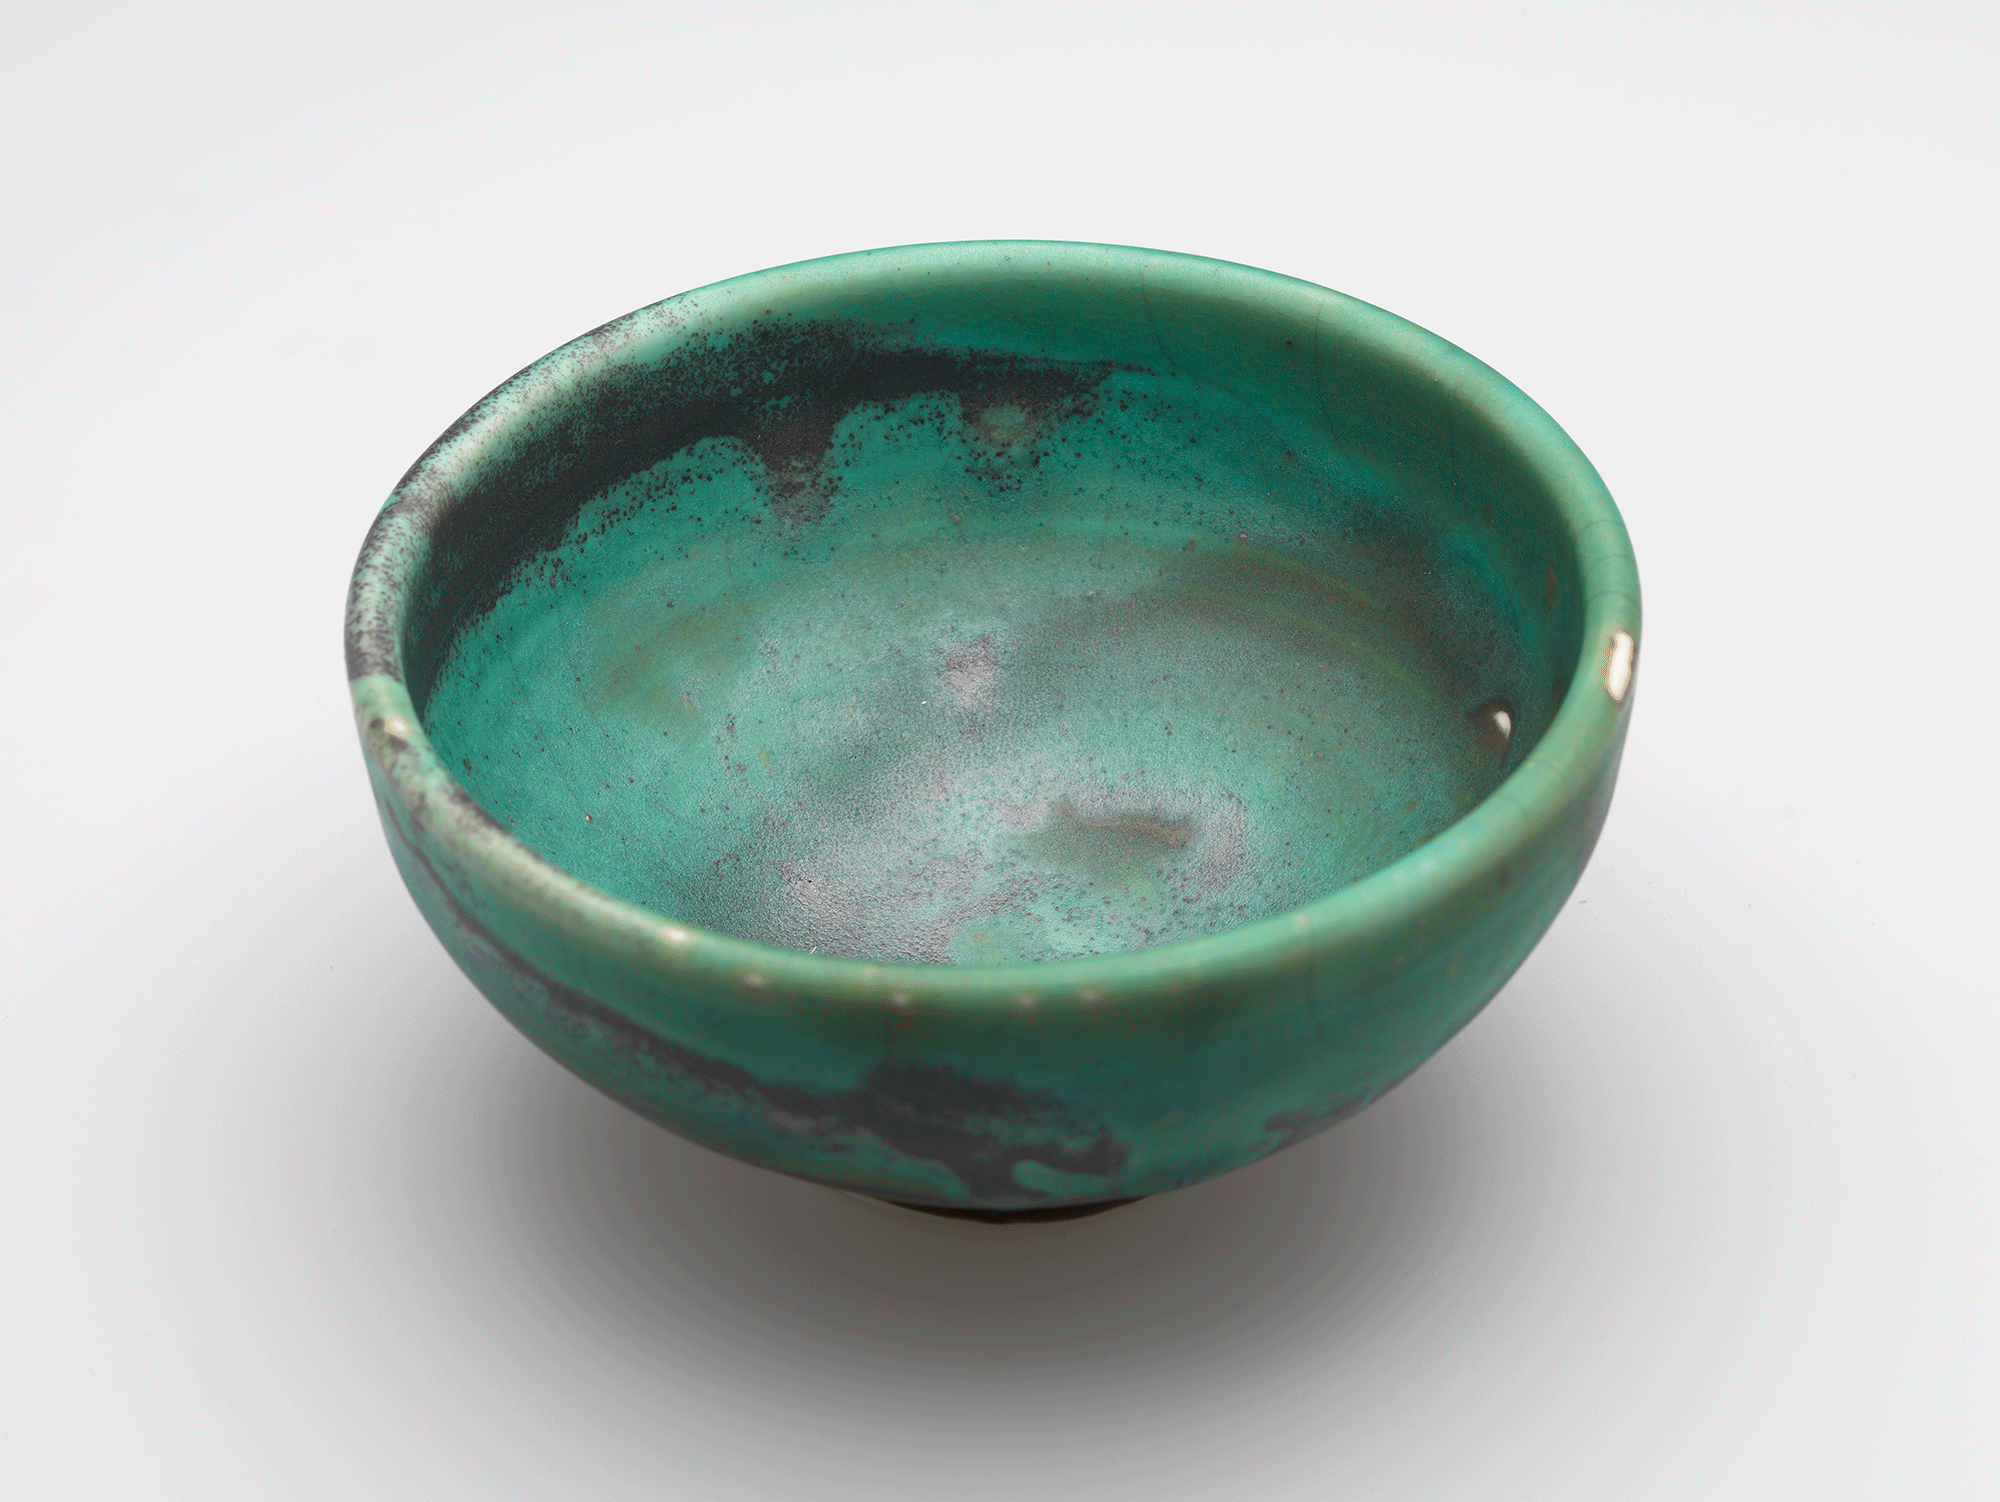 Interior view of green bowl with irregular splashes of dark gray